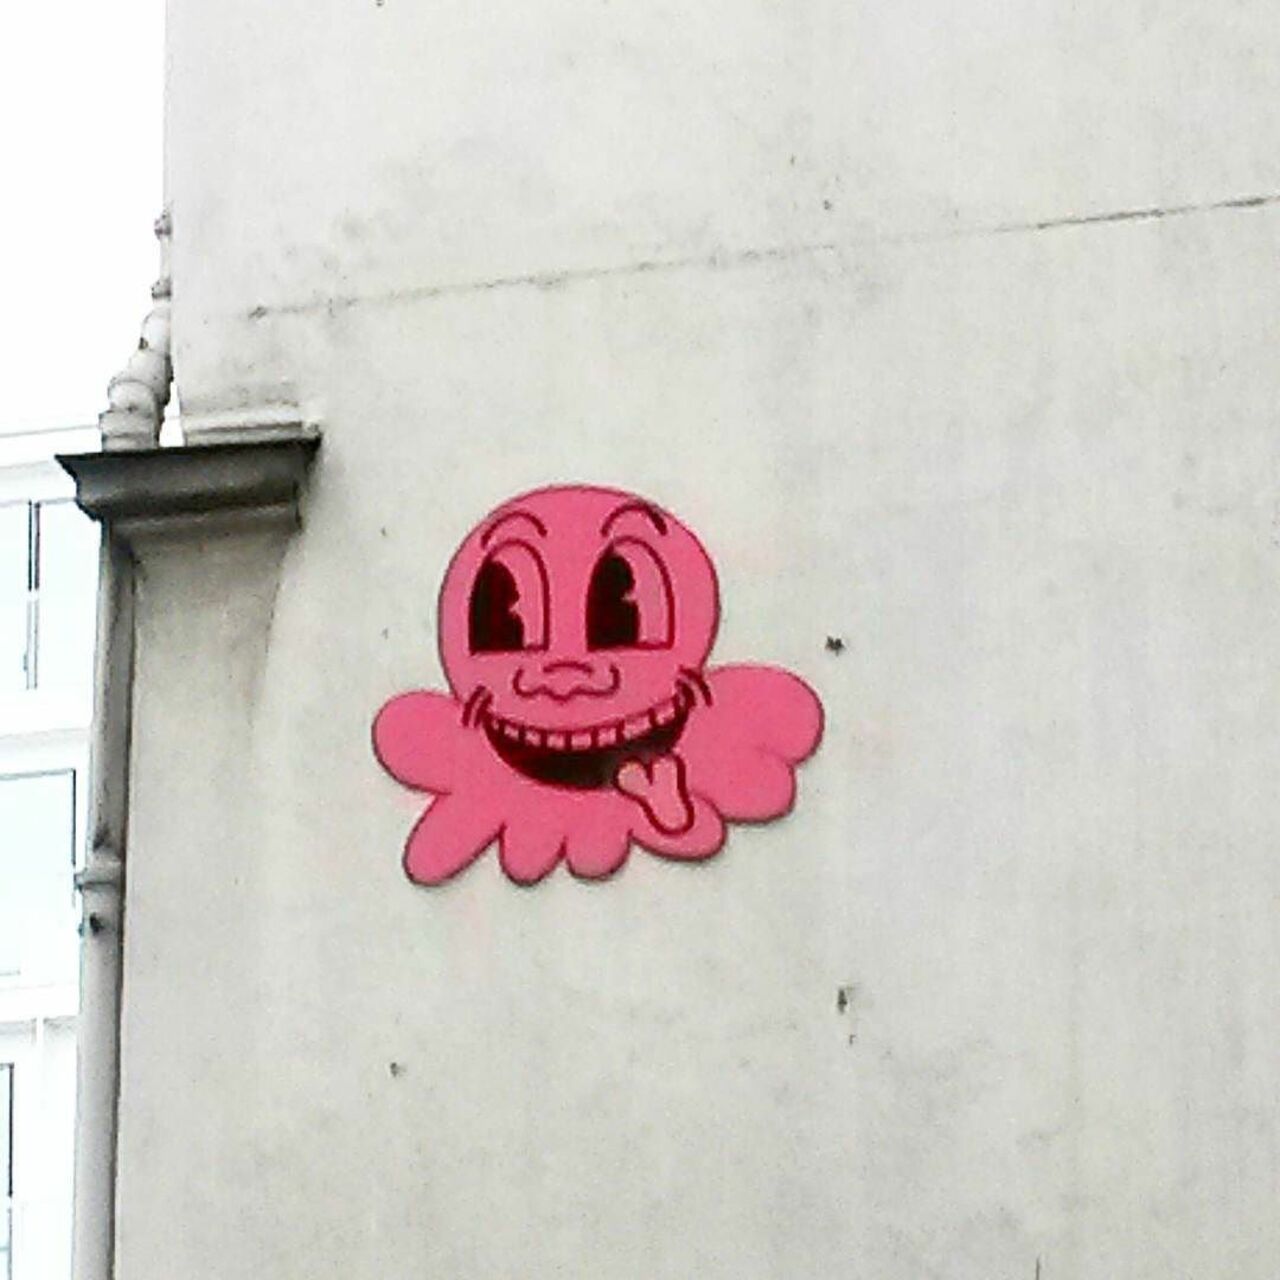 #Paris #graffiti photo by @princessepepett http://ift.tt/1XpTaRc #StreetArt https://t.co/L2dUMED0gi